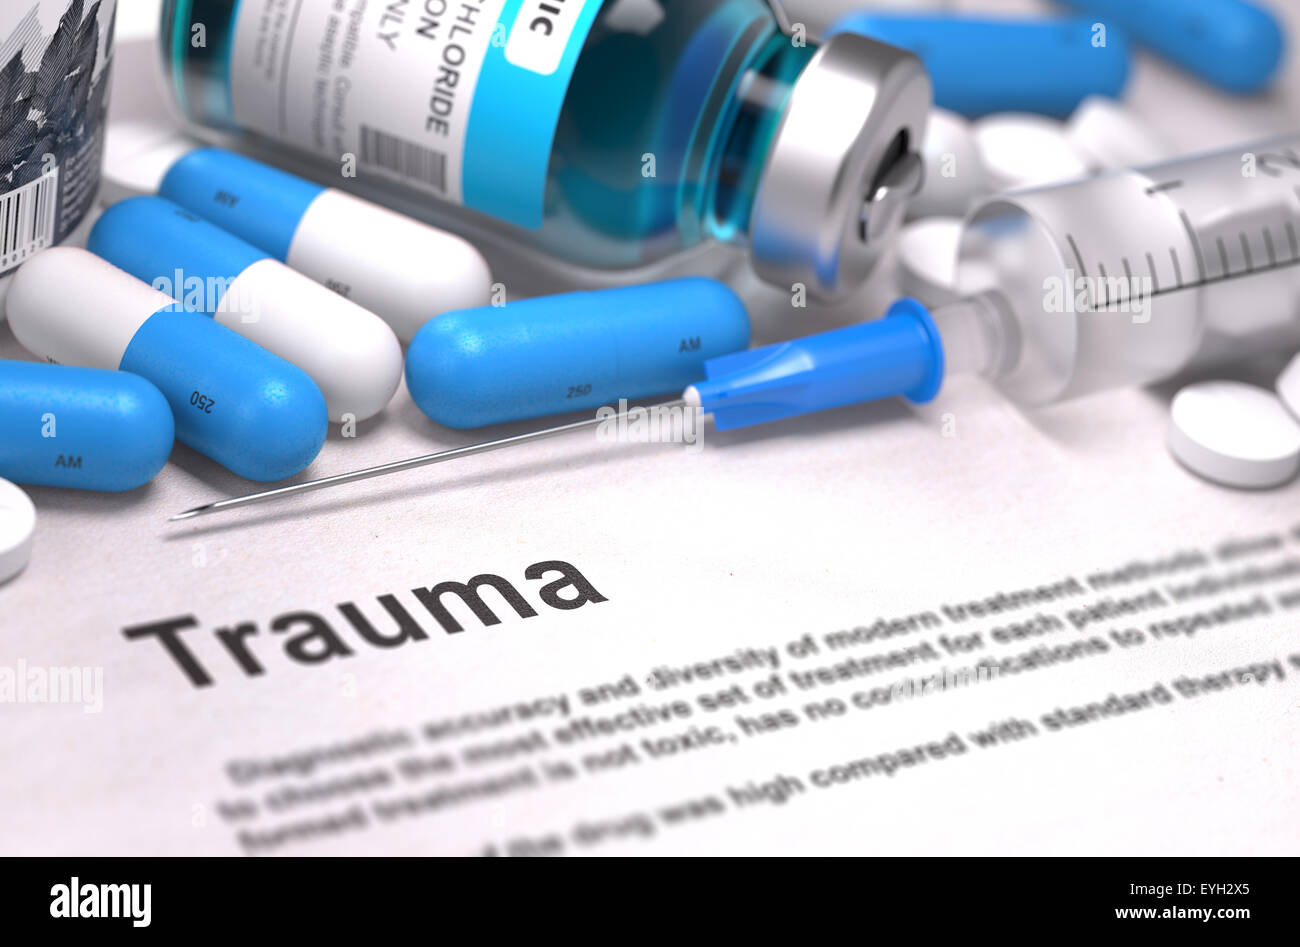 Trauma - Medical Concept. 3D Render. Stock Photo